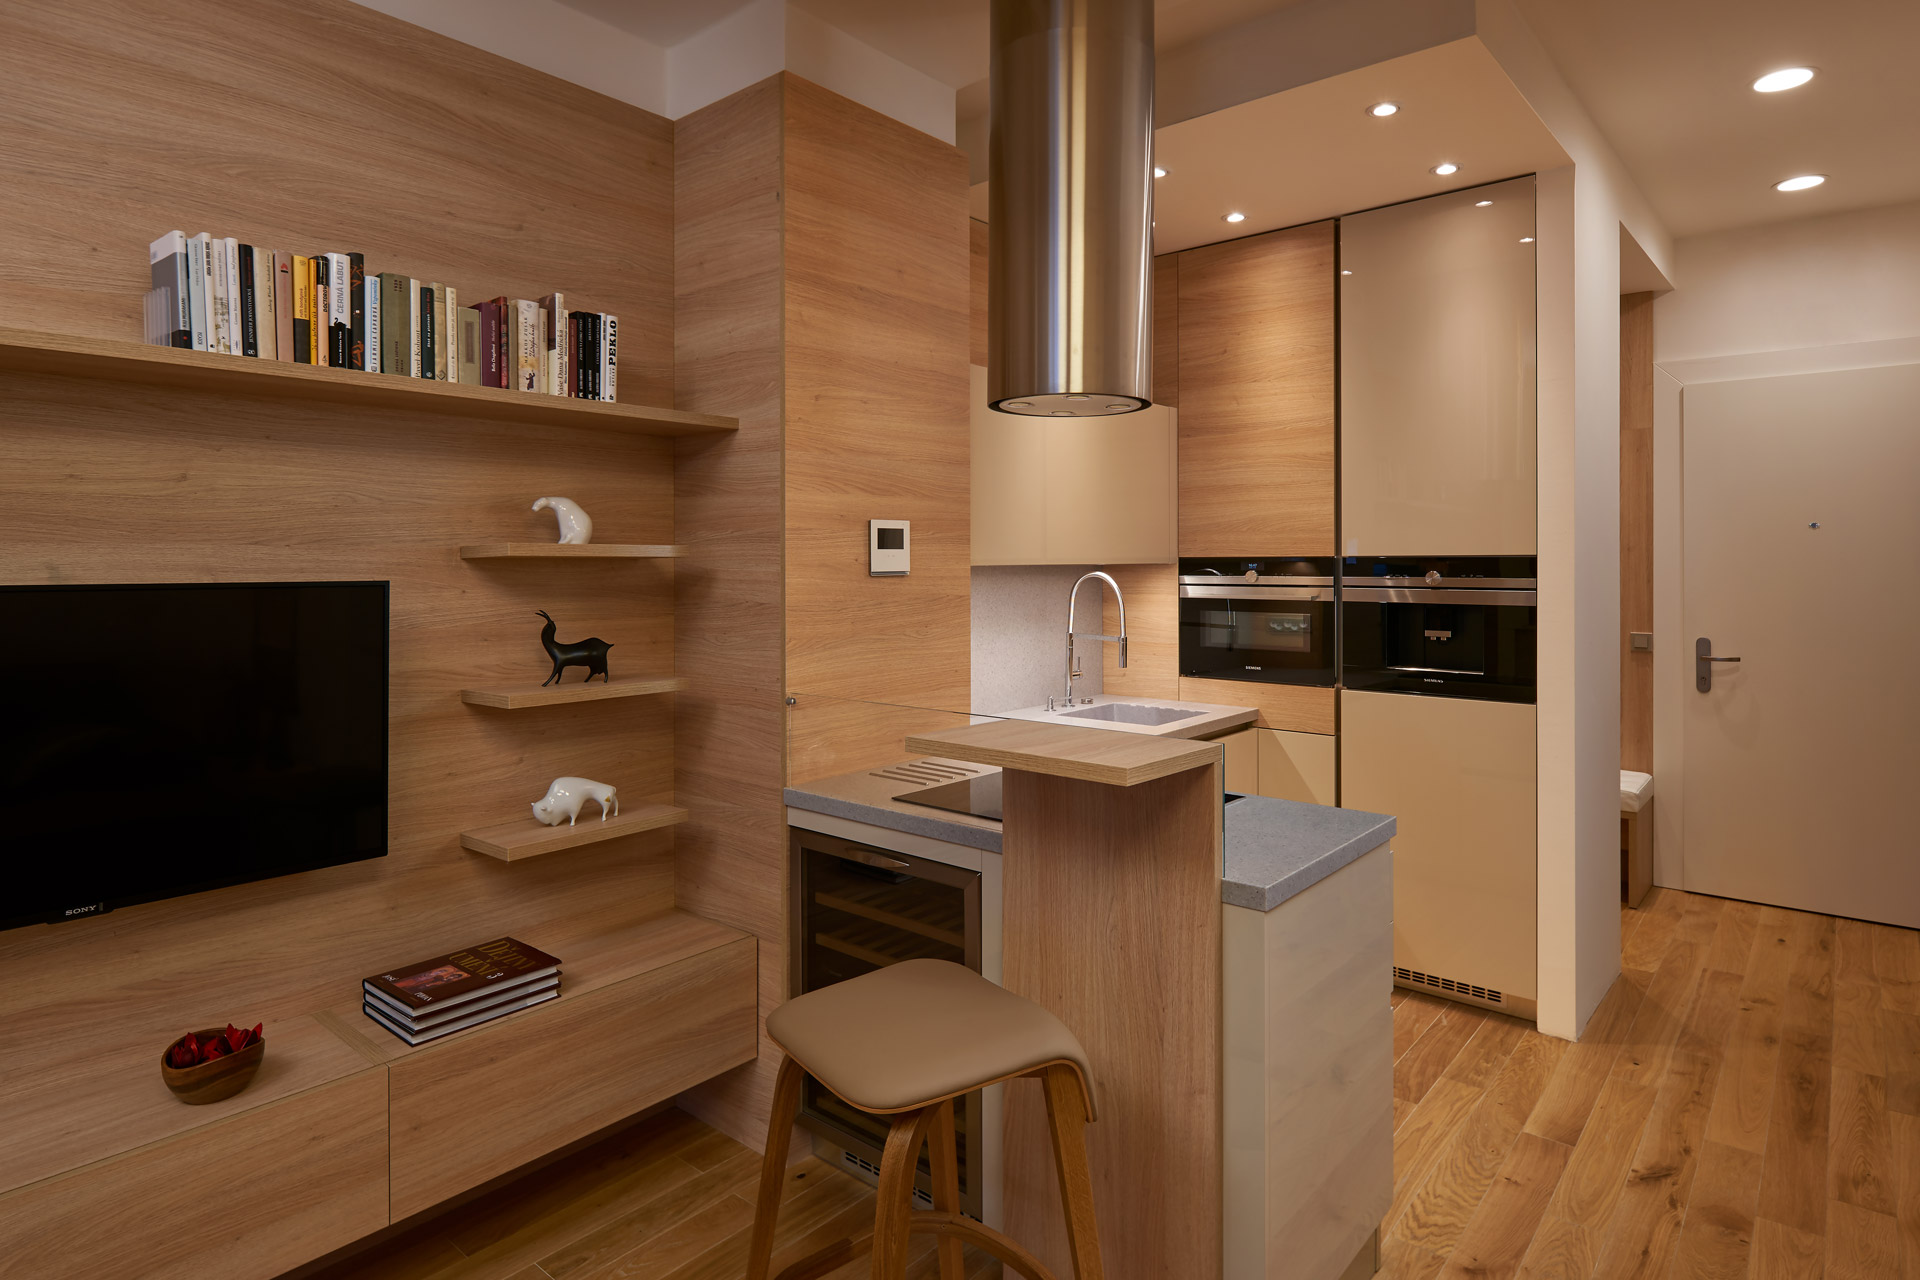 Hanák Furniture Realization of a small apartment